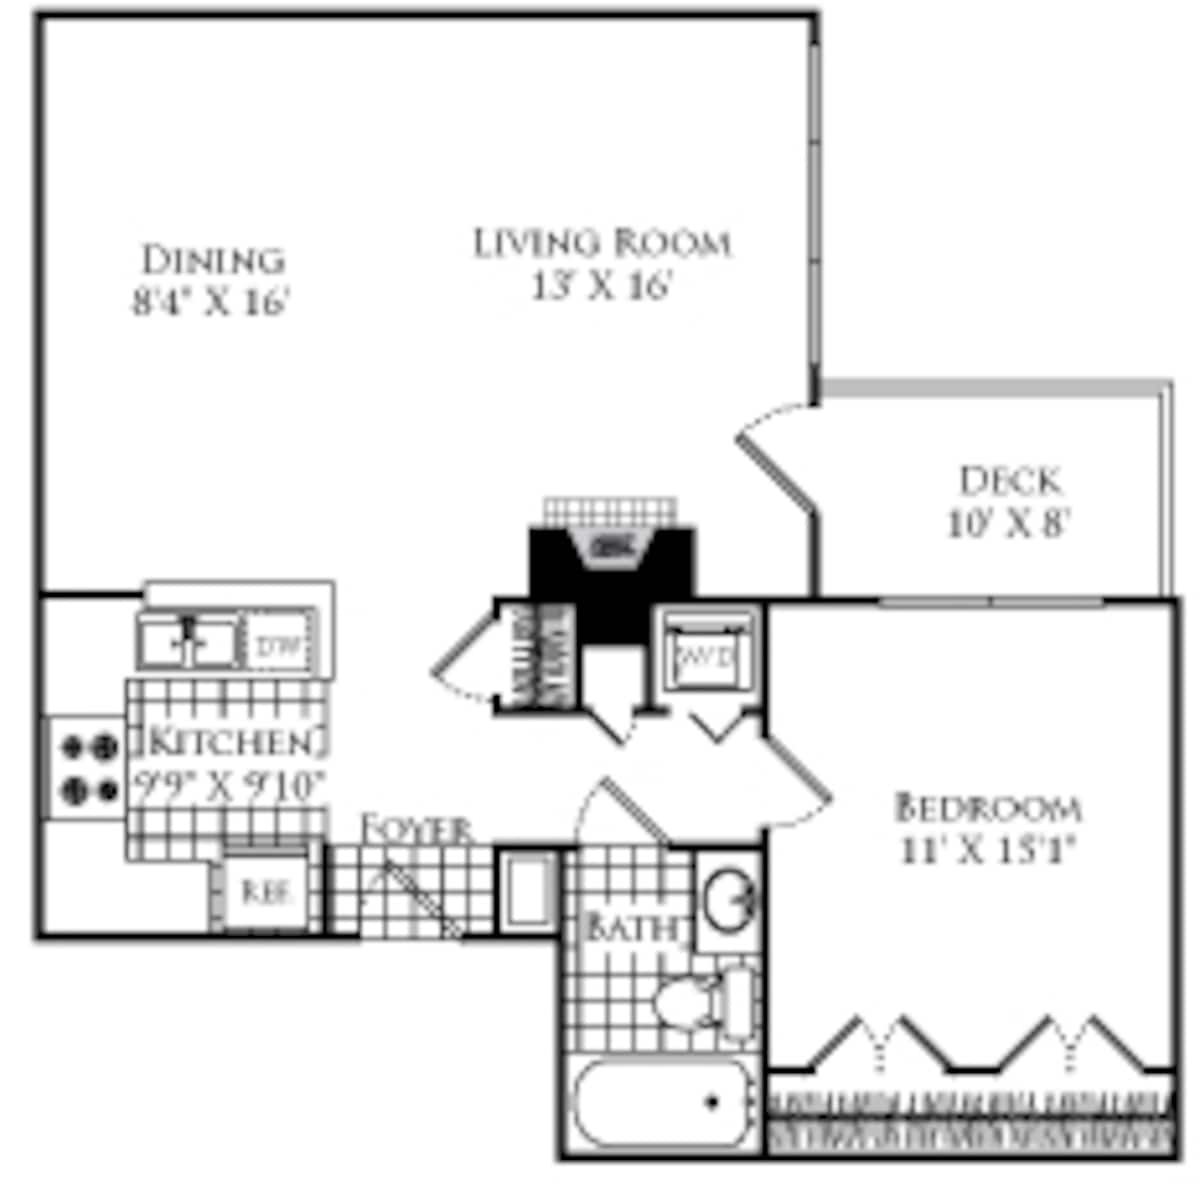 Floorplan diagram for Mulberry, showing 1 bedroom